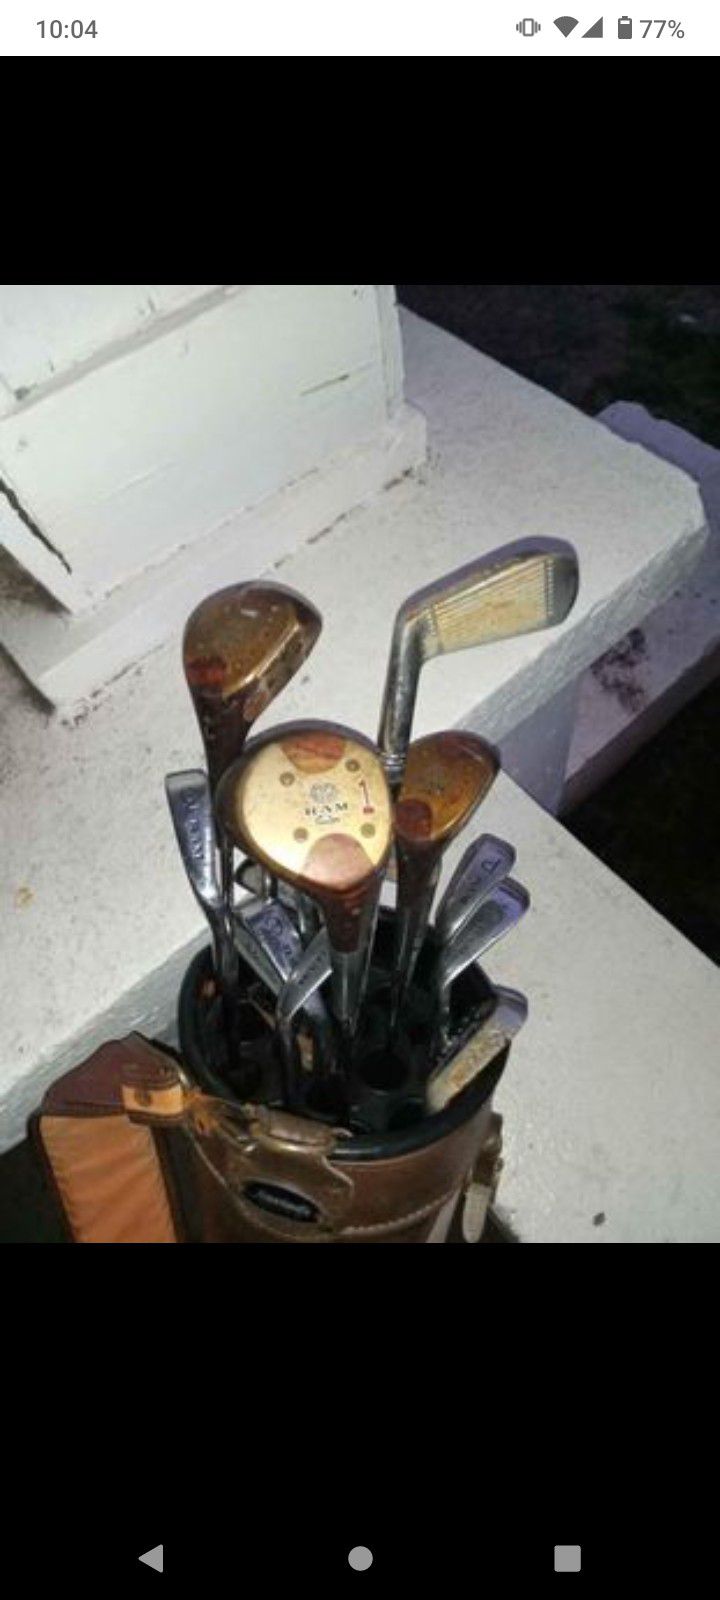 Golf Equipment 